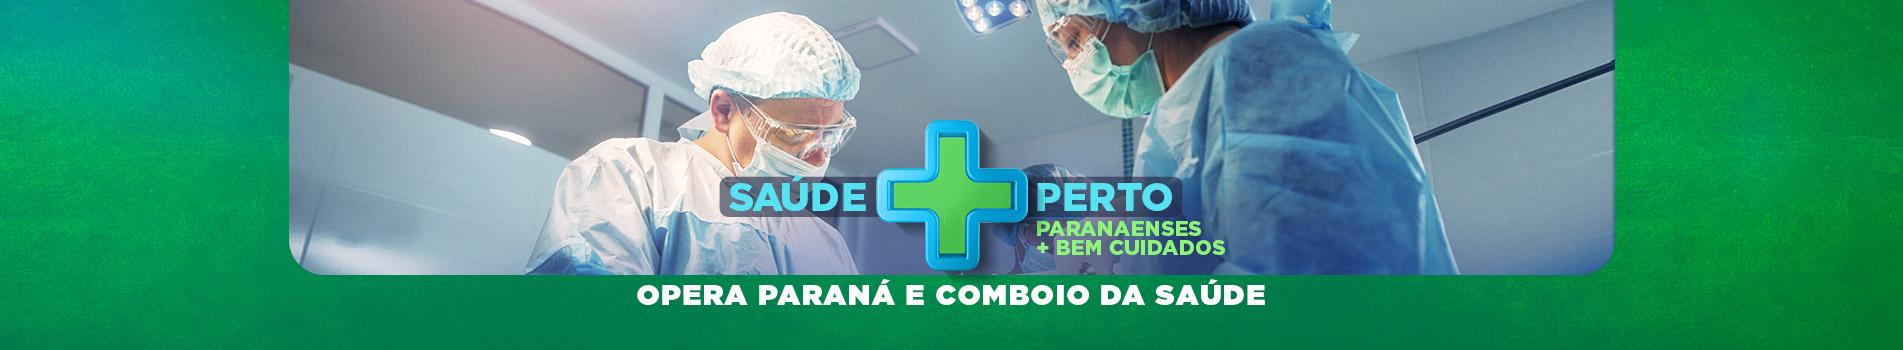 Opera Paraná e Comboio da Saúde